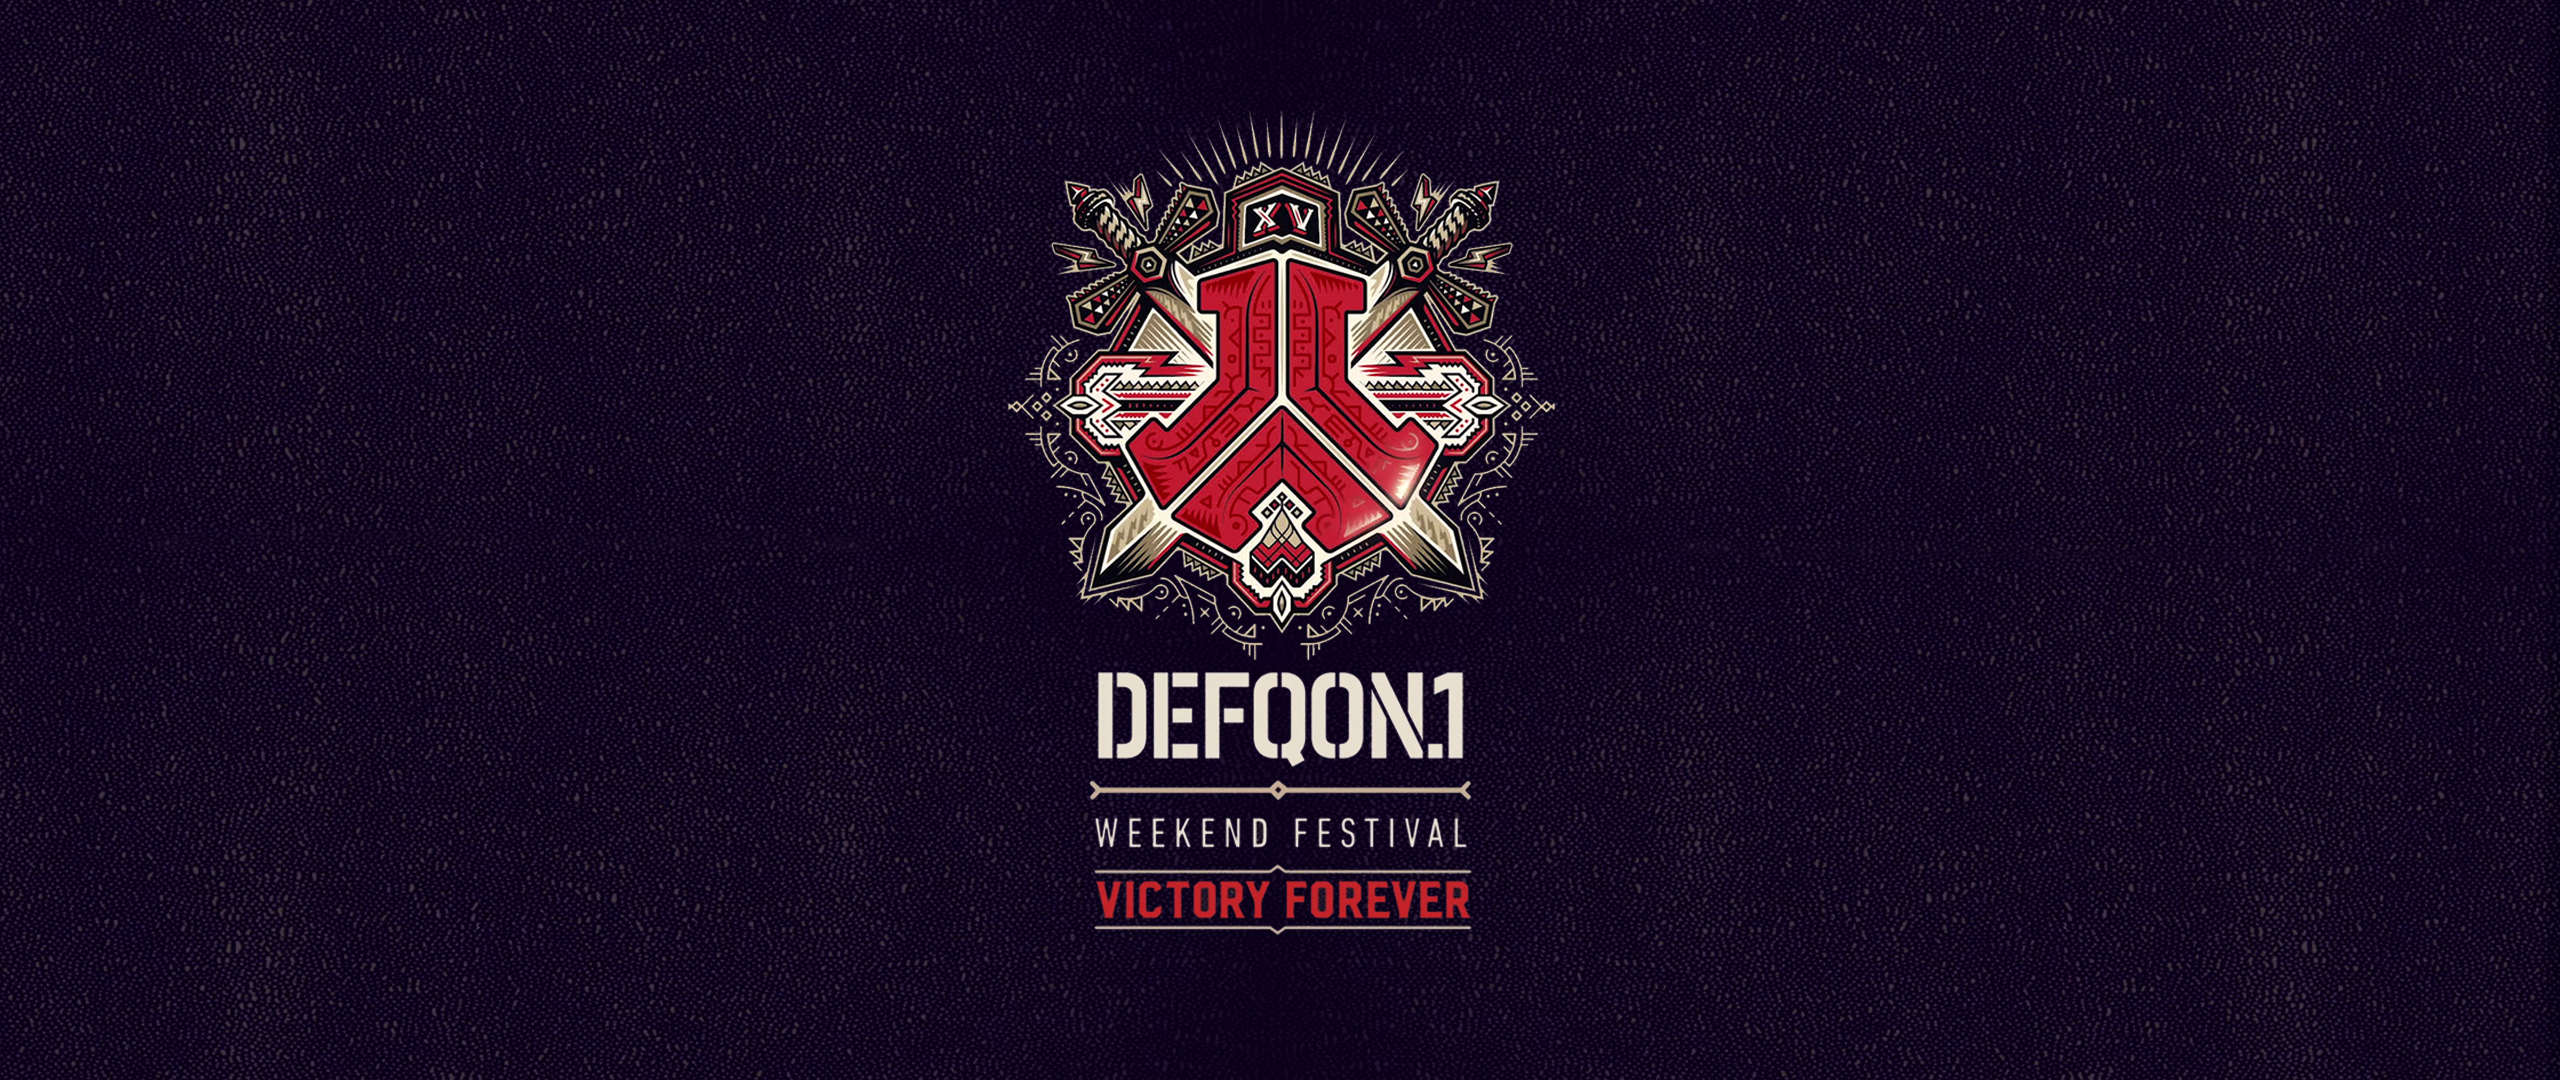 Defqon 1 Weekend Festival 2017 Desktop - Defqon.1 Festival , HD Wallpaper & Backgrounds